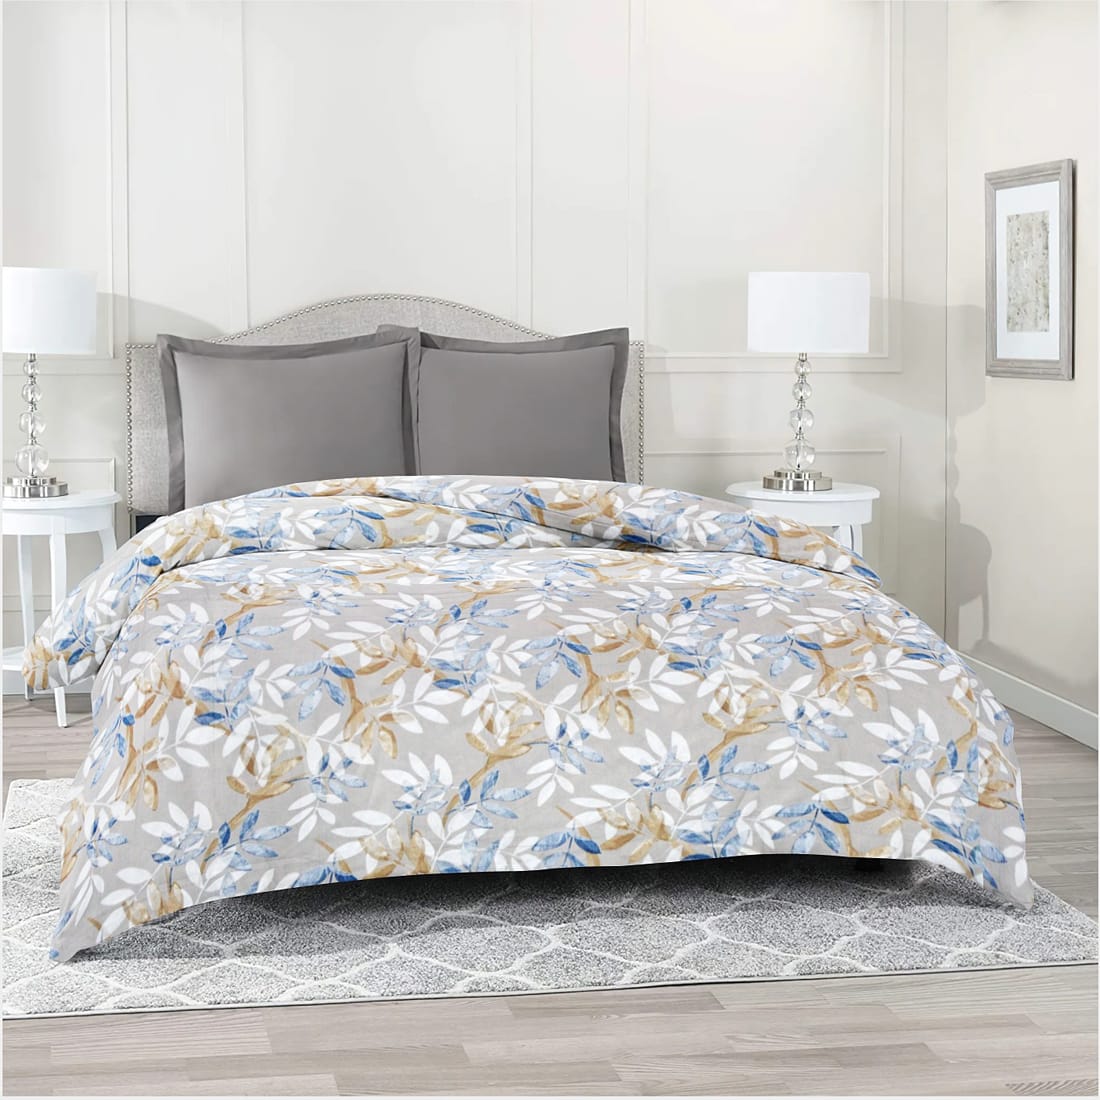 Comfy 250 TC Blue Floral Print Cotton Duvet Cover online in India